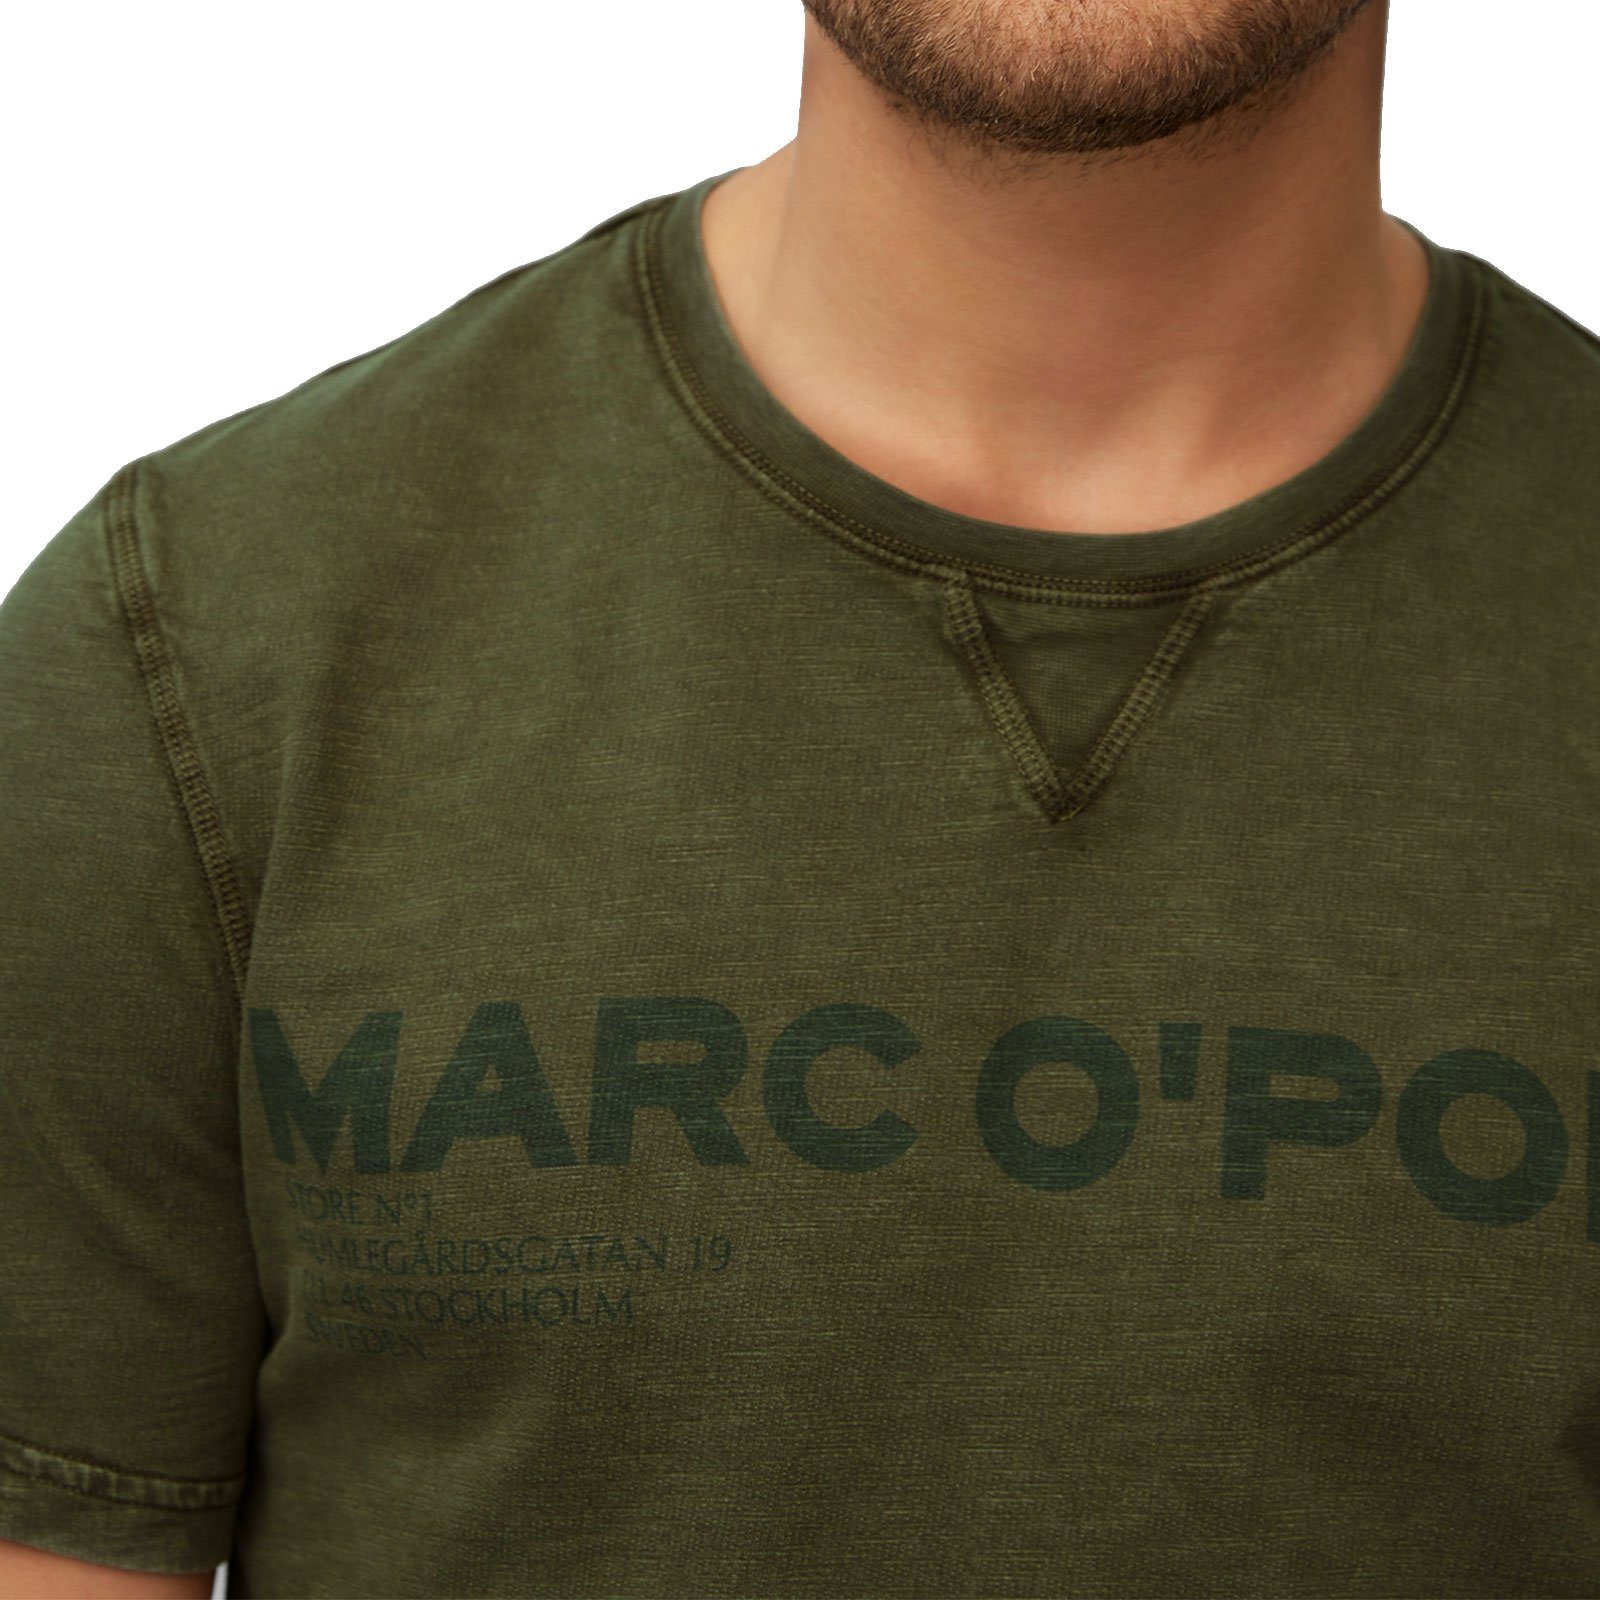 O'Polo Shirt Crew Marken-Aufschrift olive Neck T-Shirt mit 707 Marc